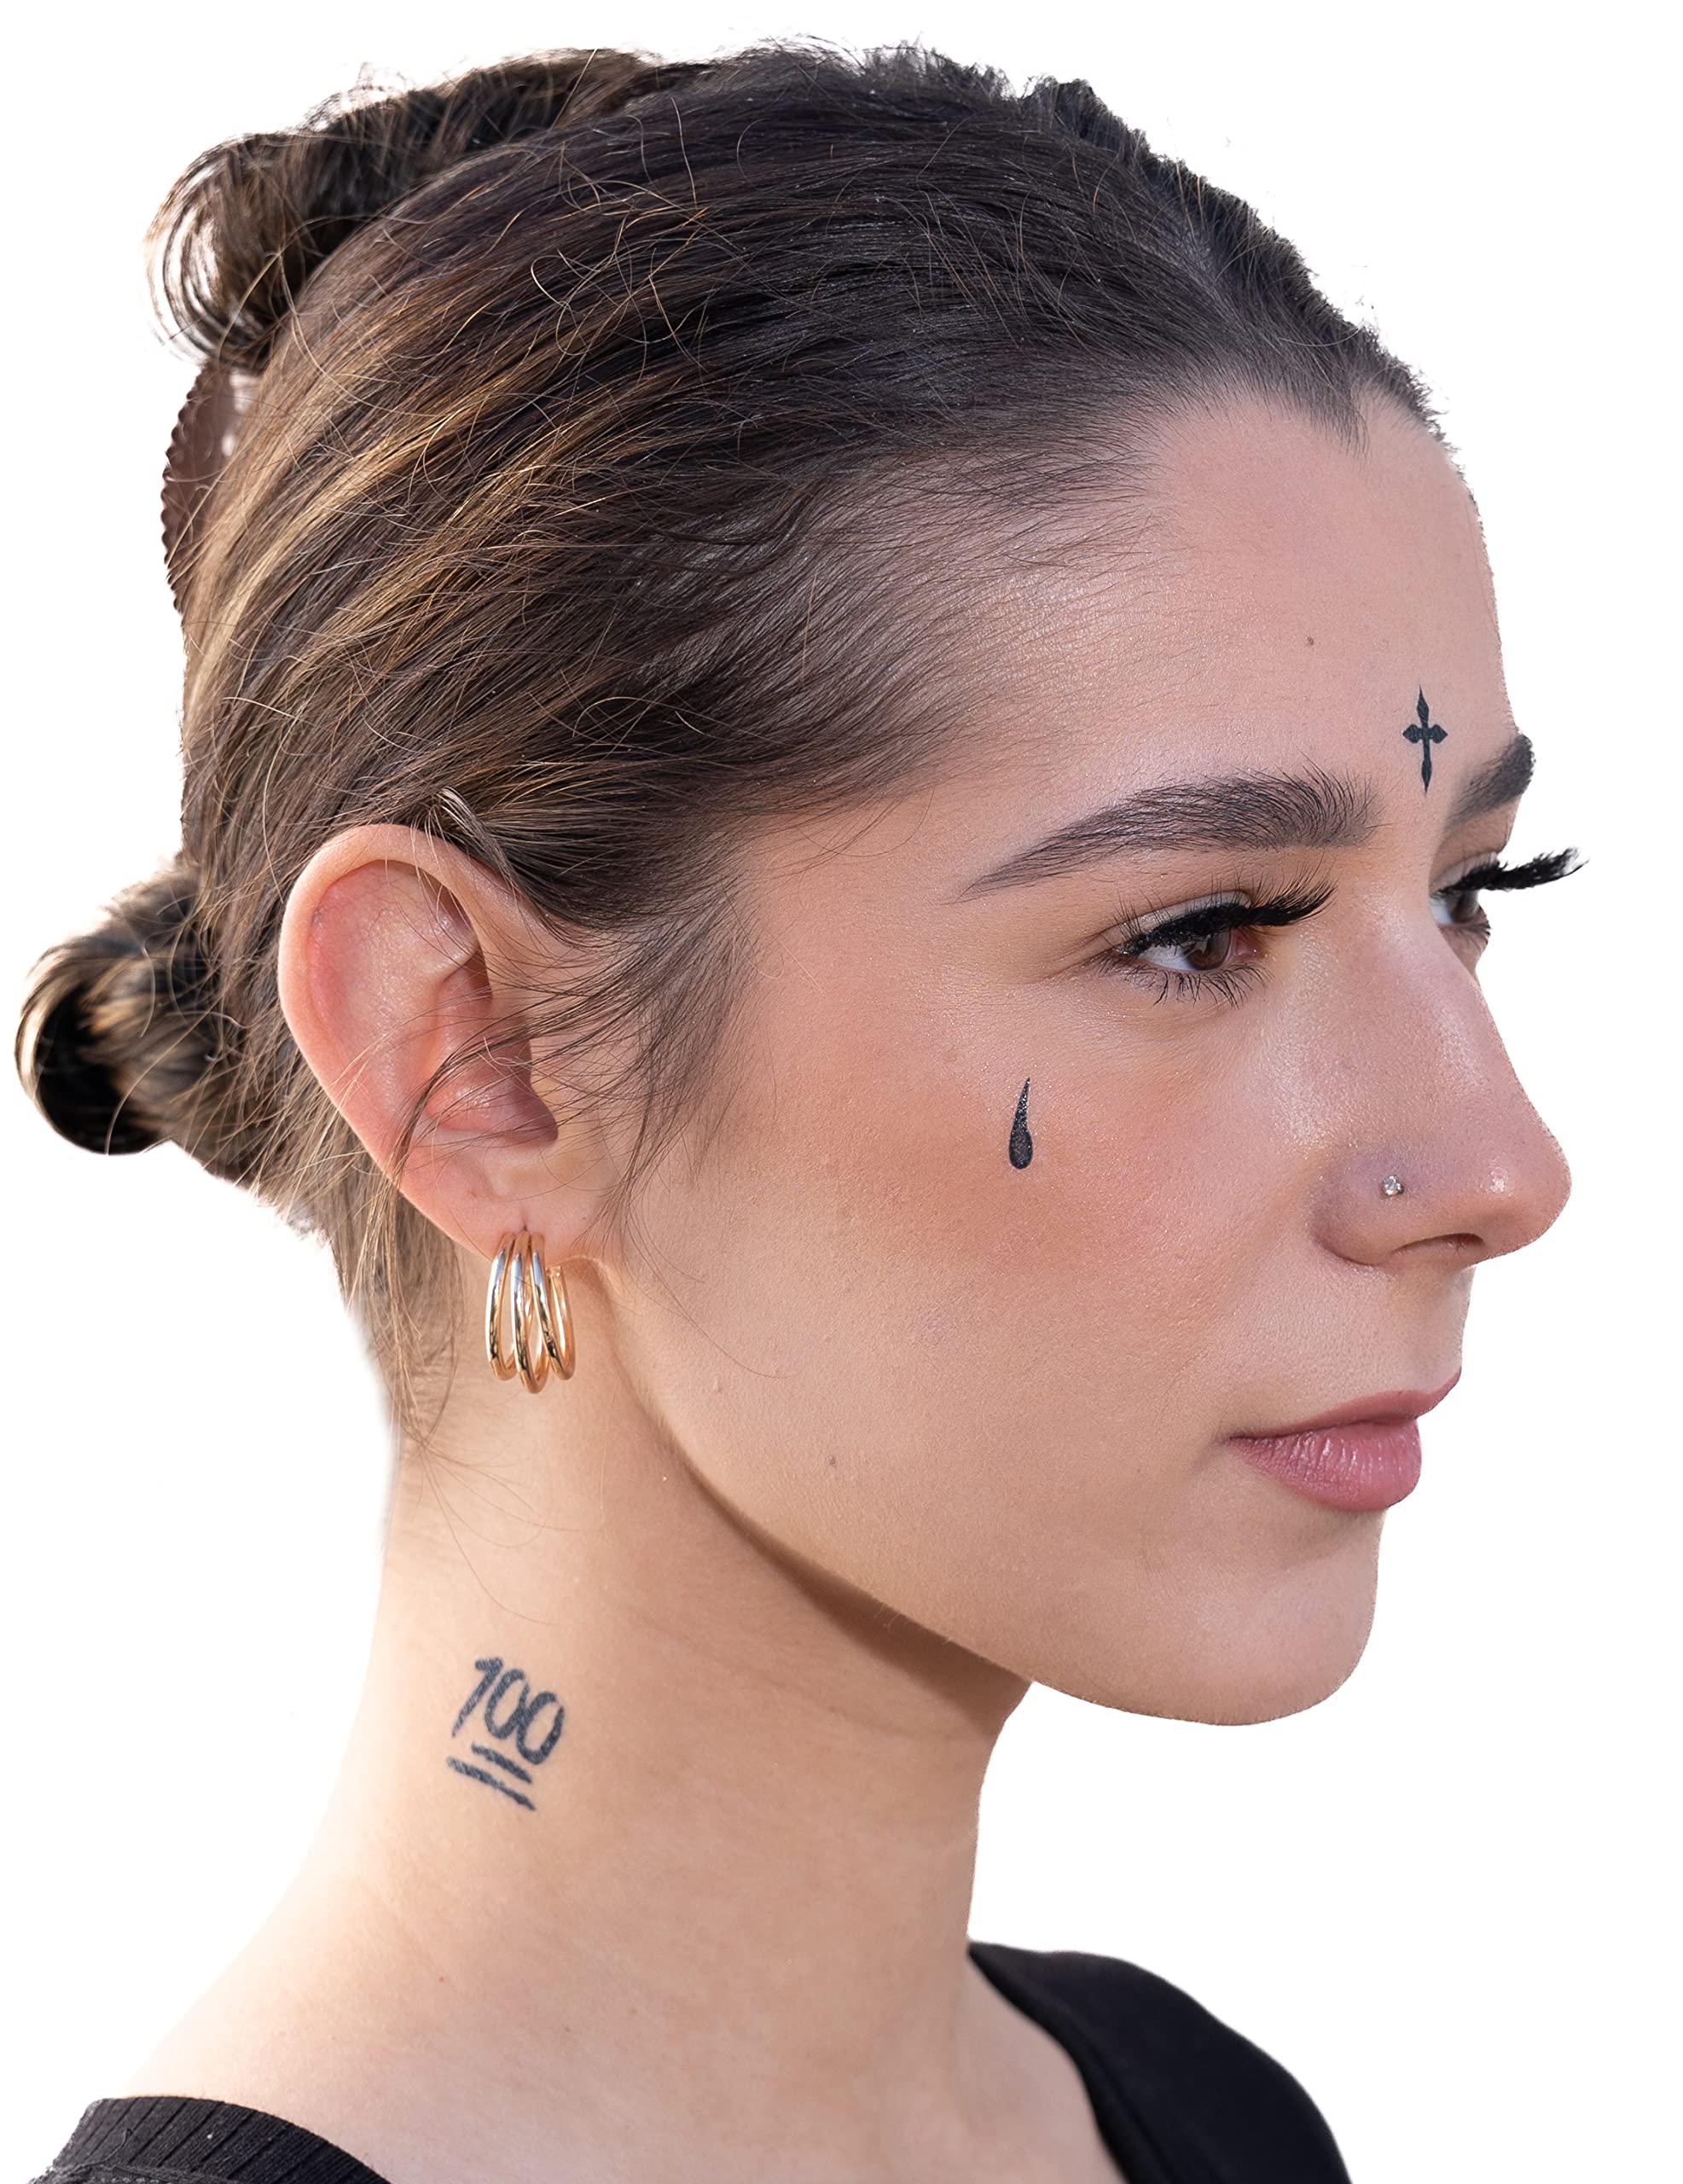 12 Celebrity Teardrop Tattoos | Steal Her Style